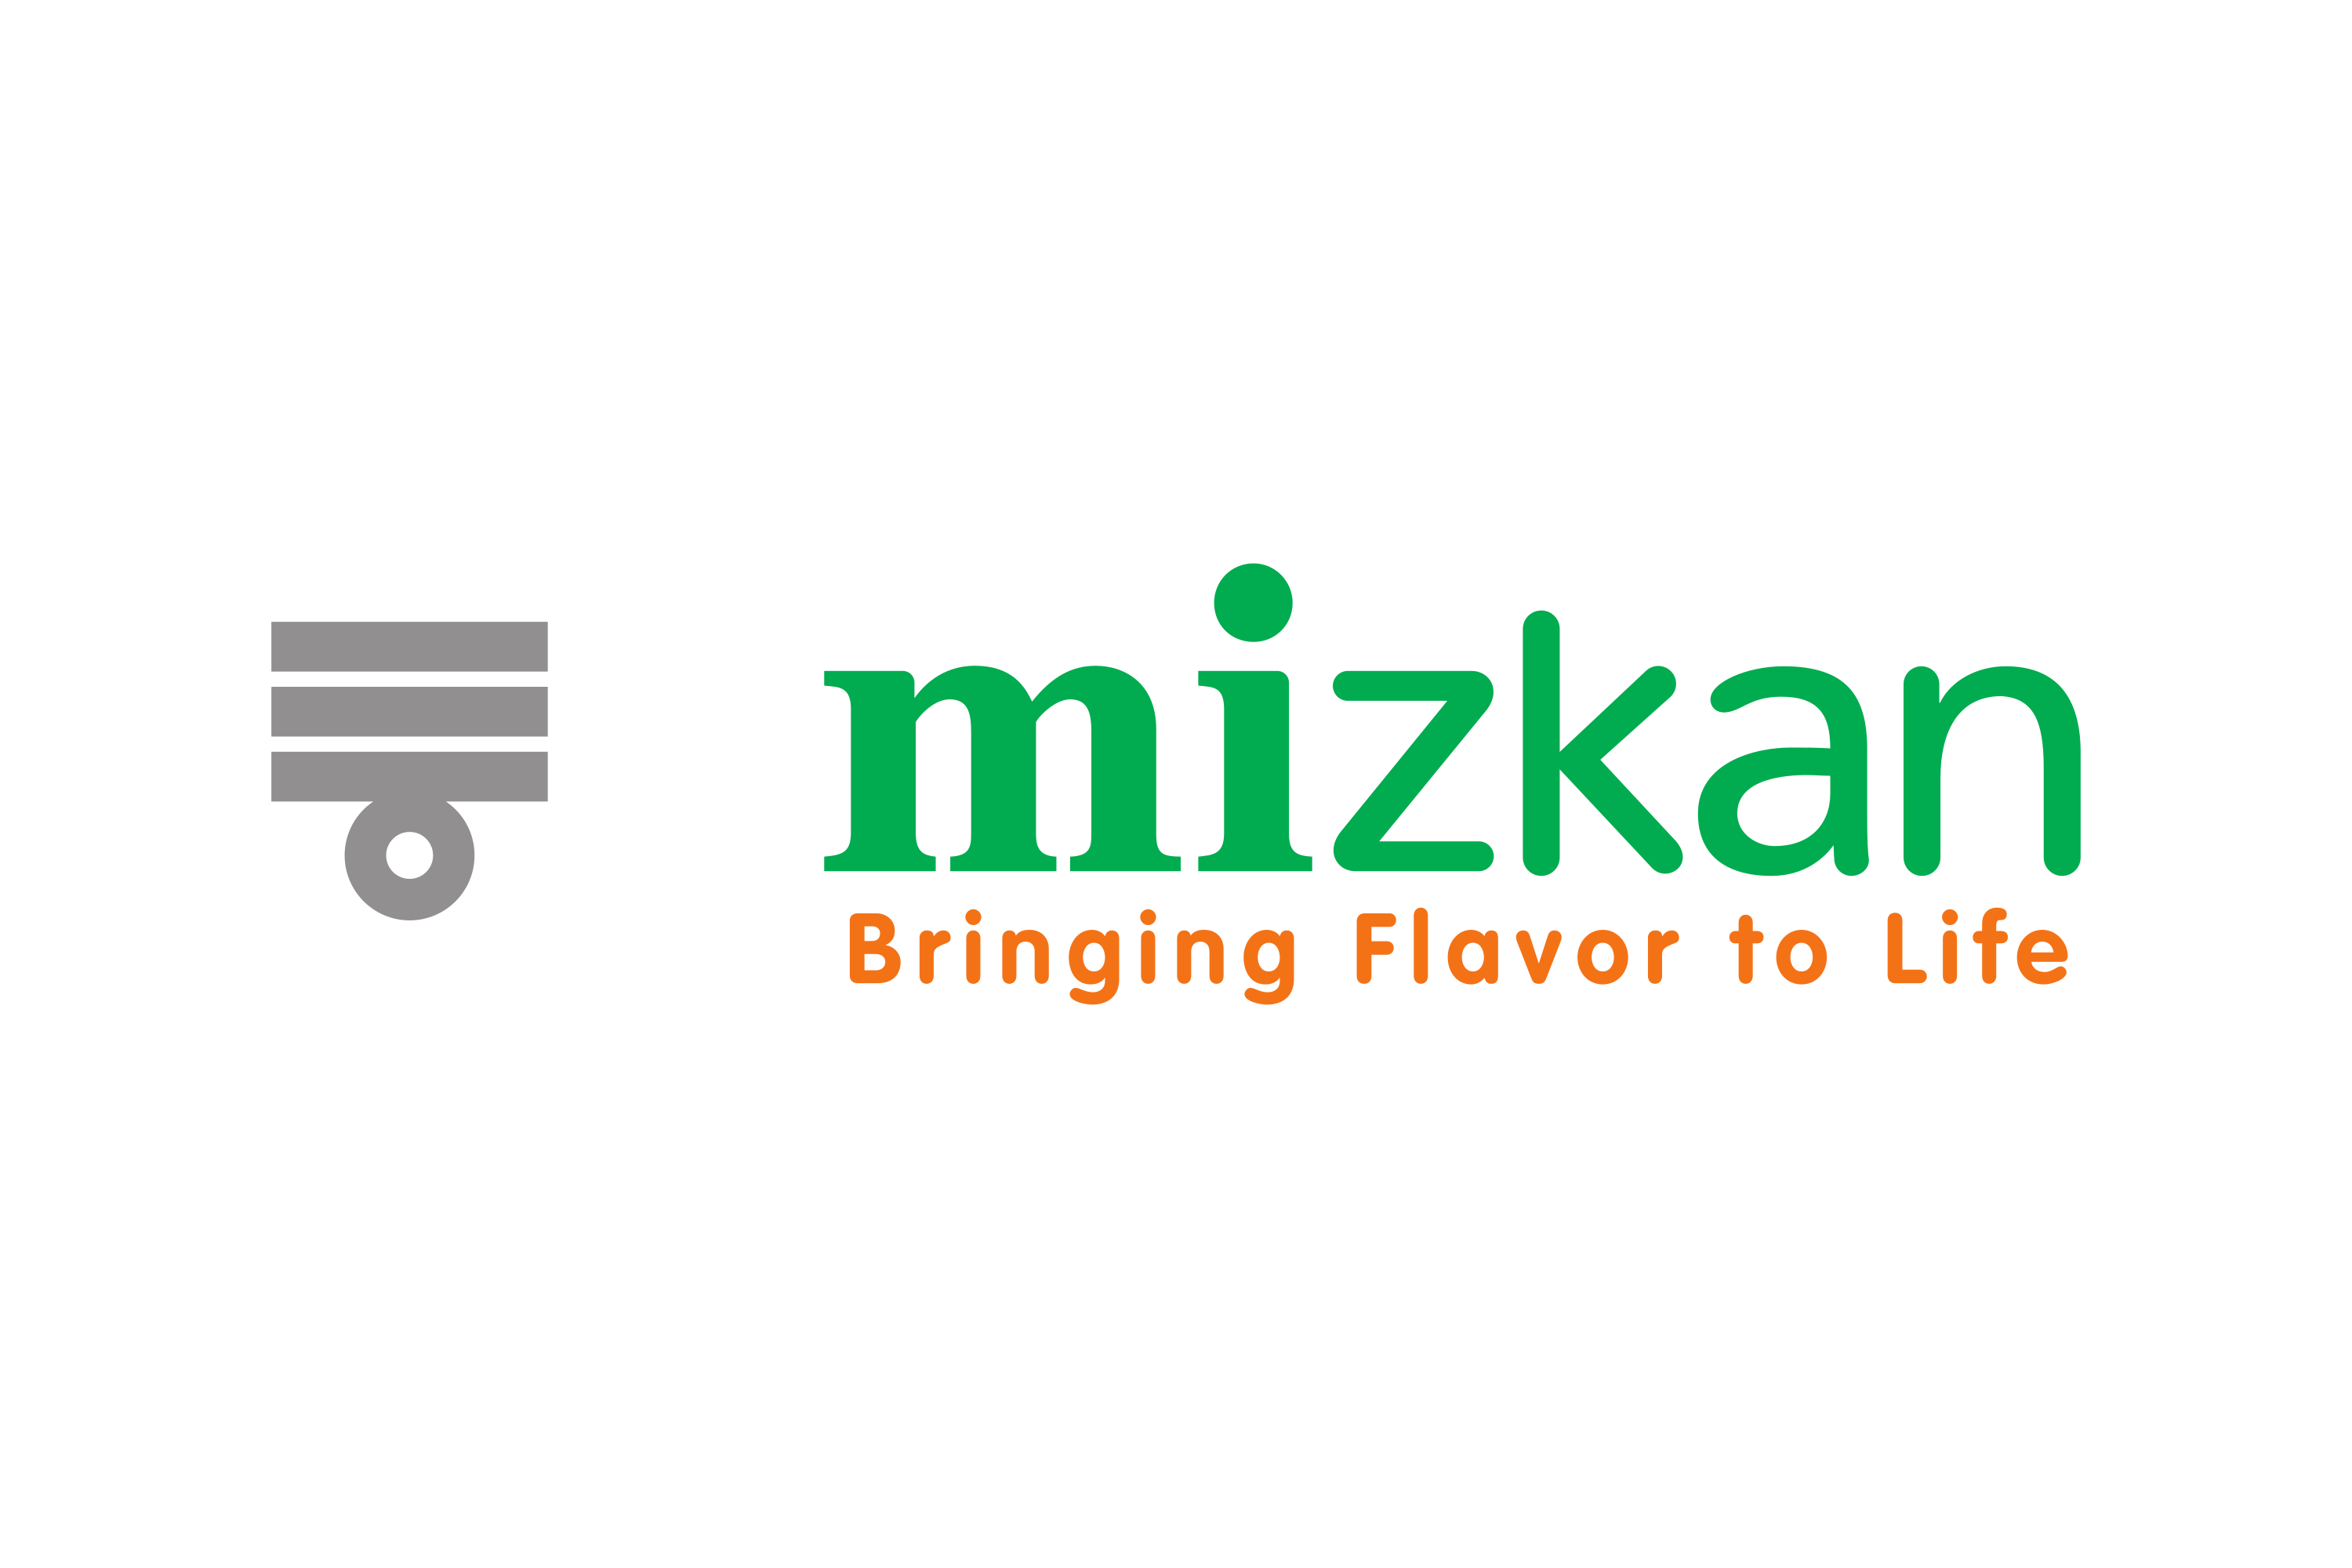 Mizkan Logo